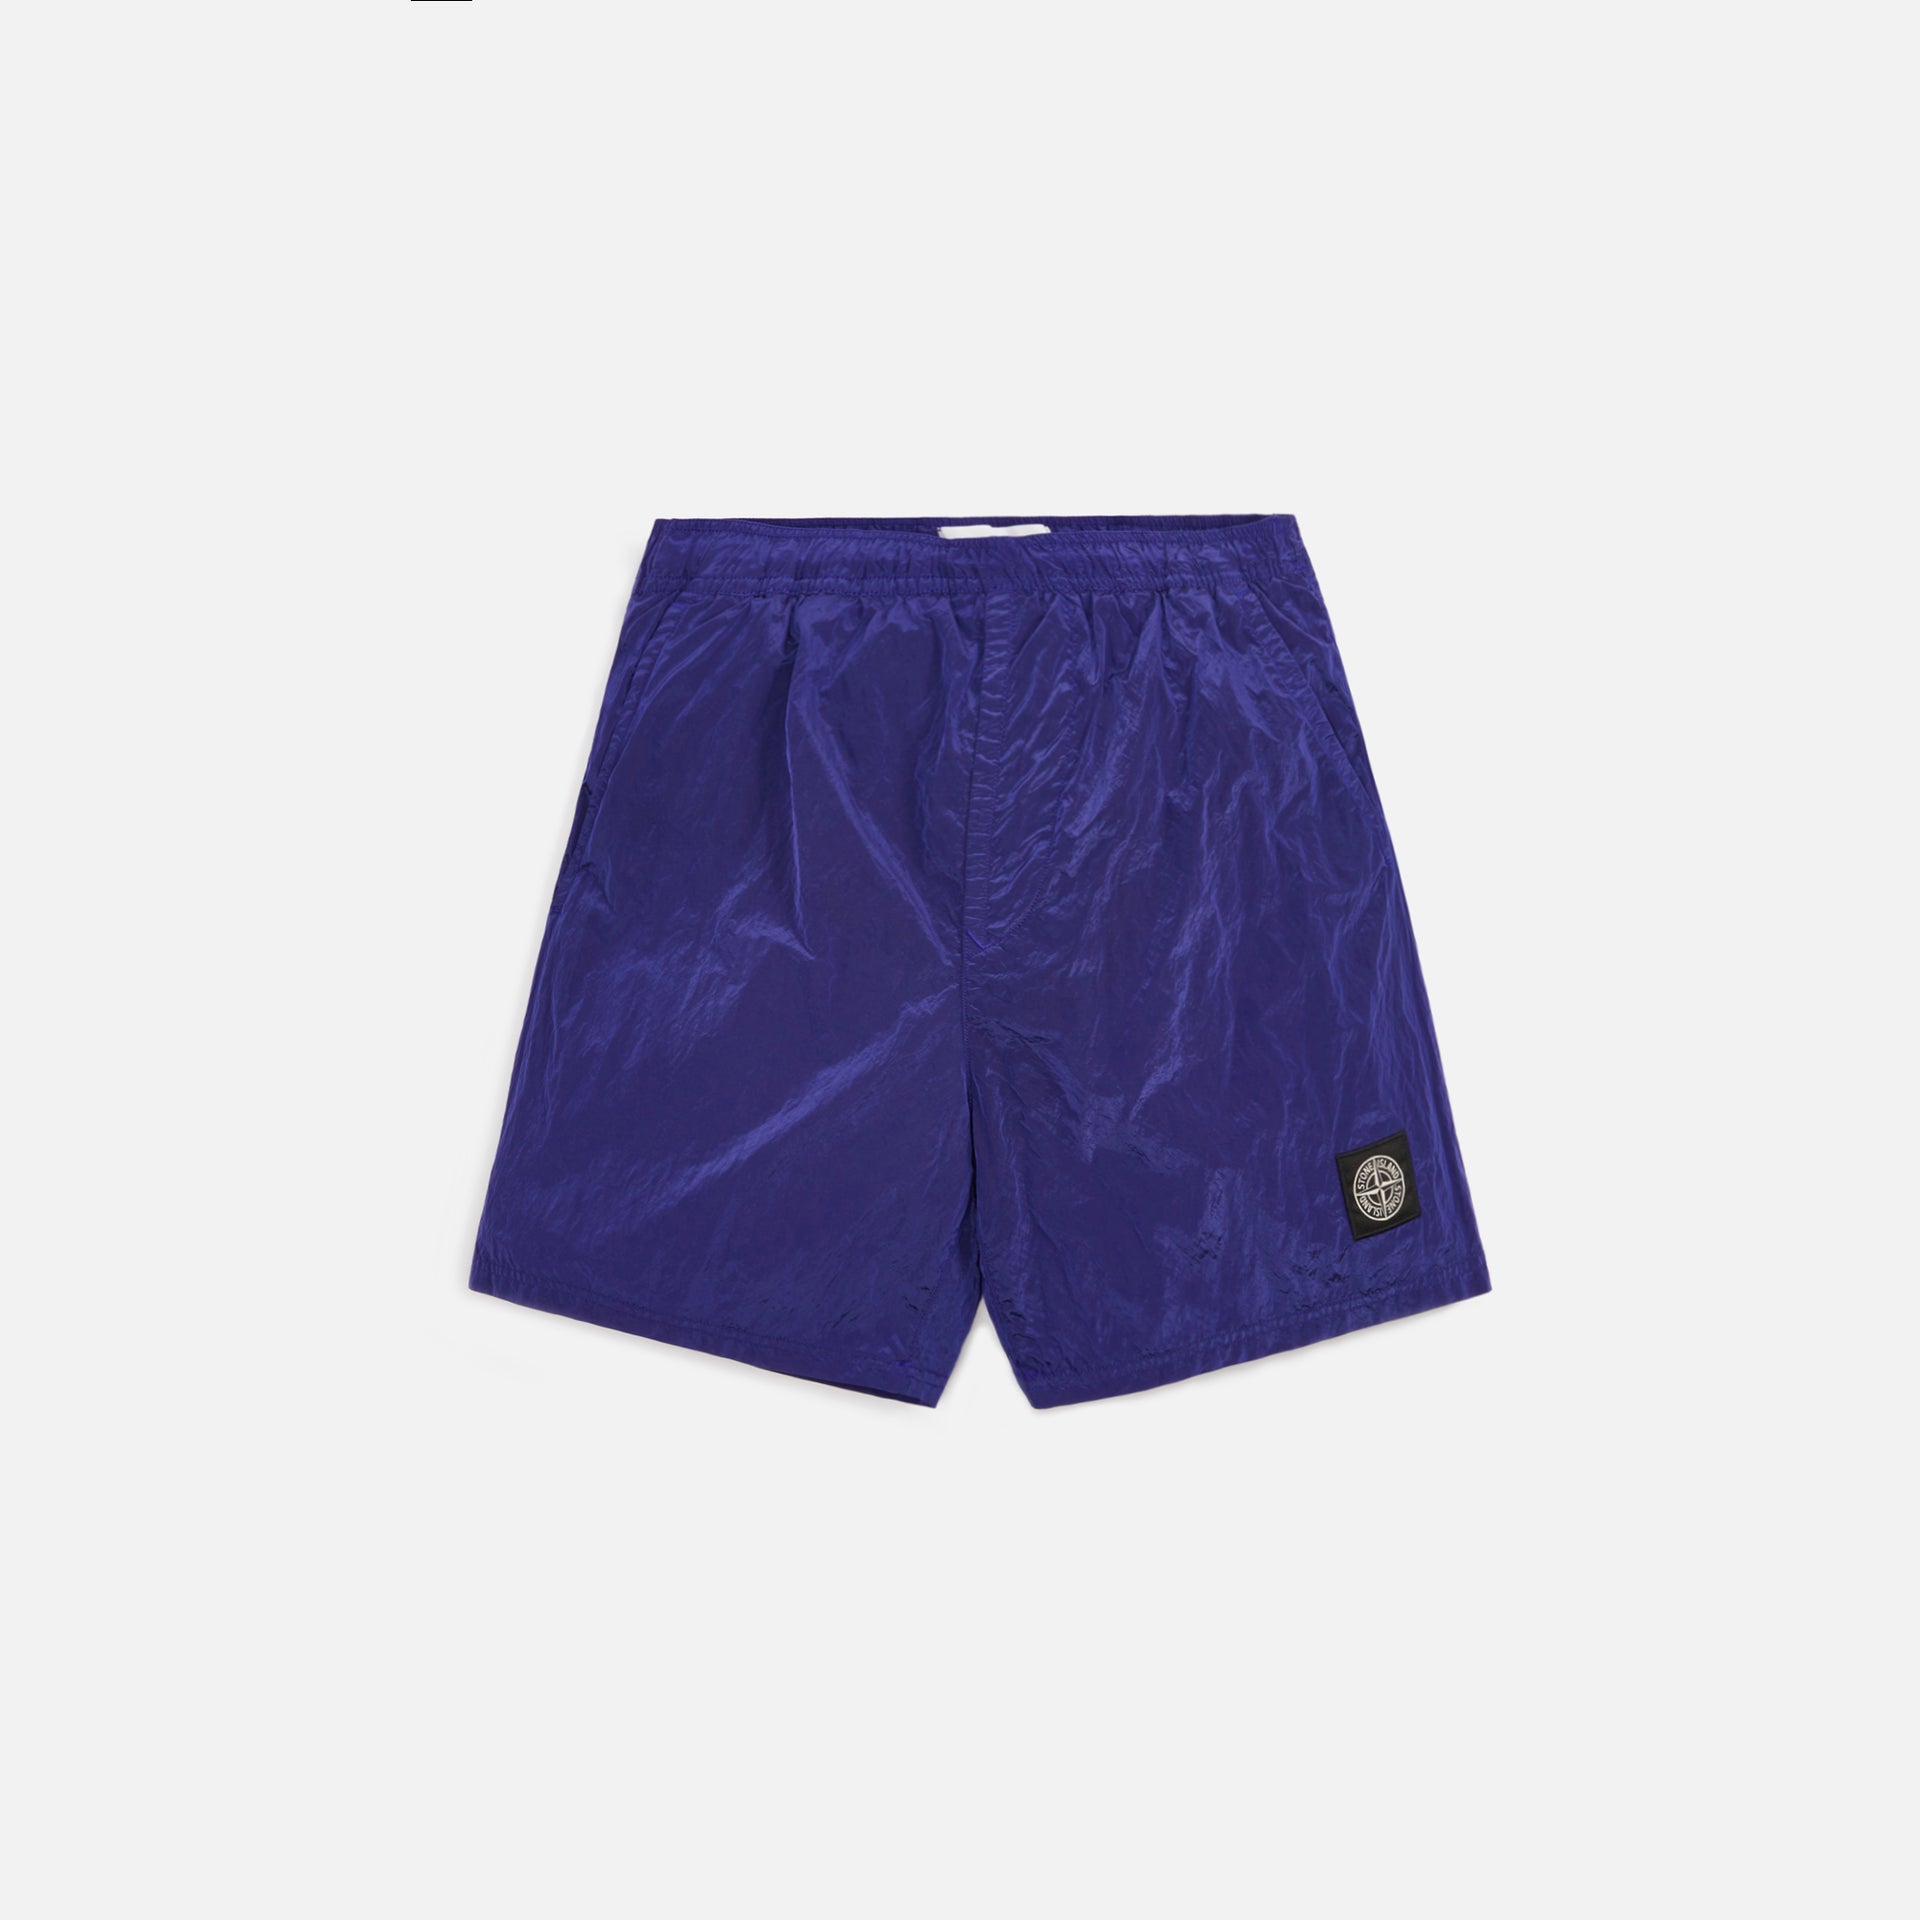 Stone Island Nylon Metal Garment Dyed Swim Shorts - Periwinkle